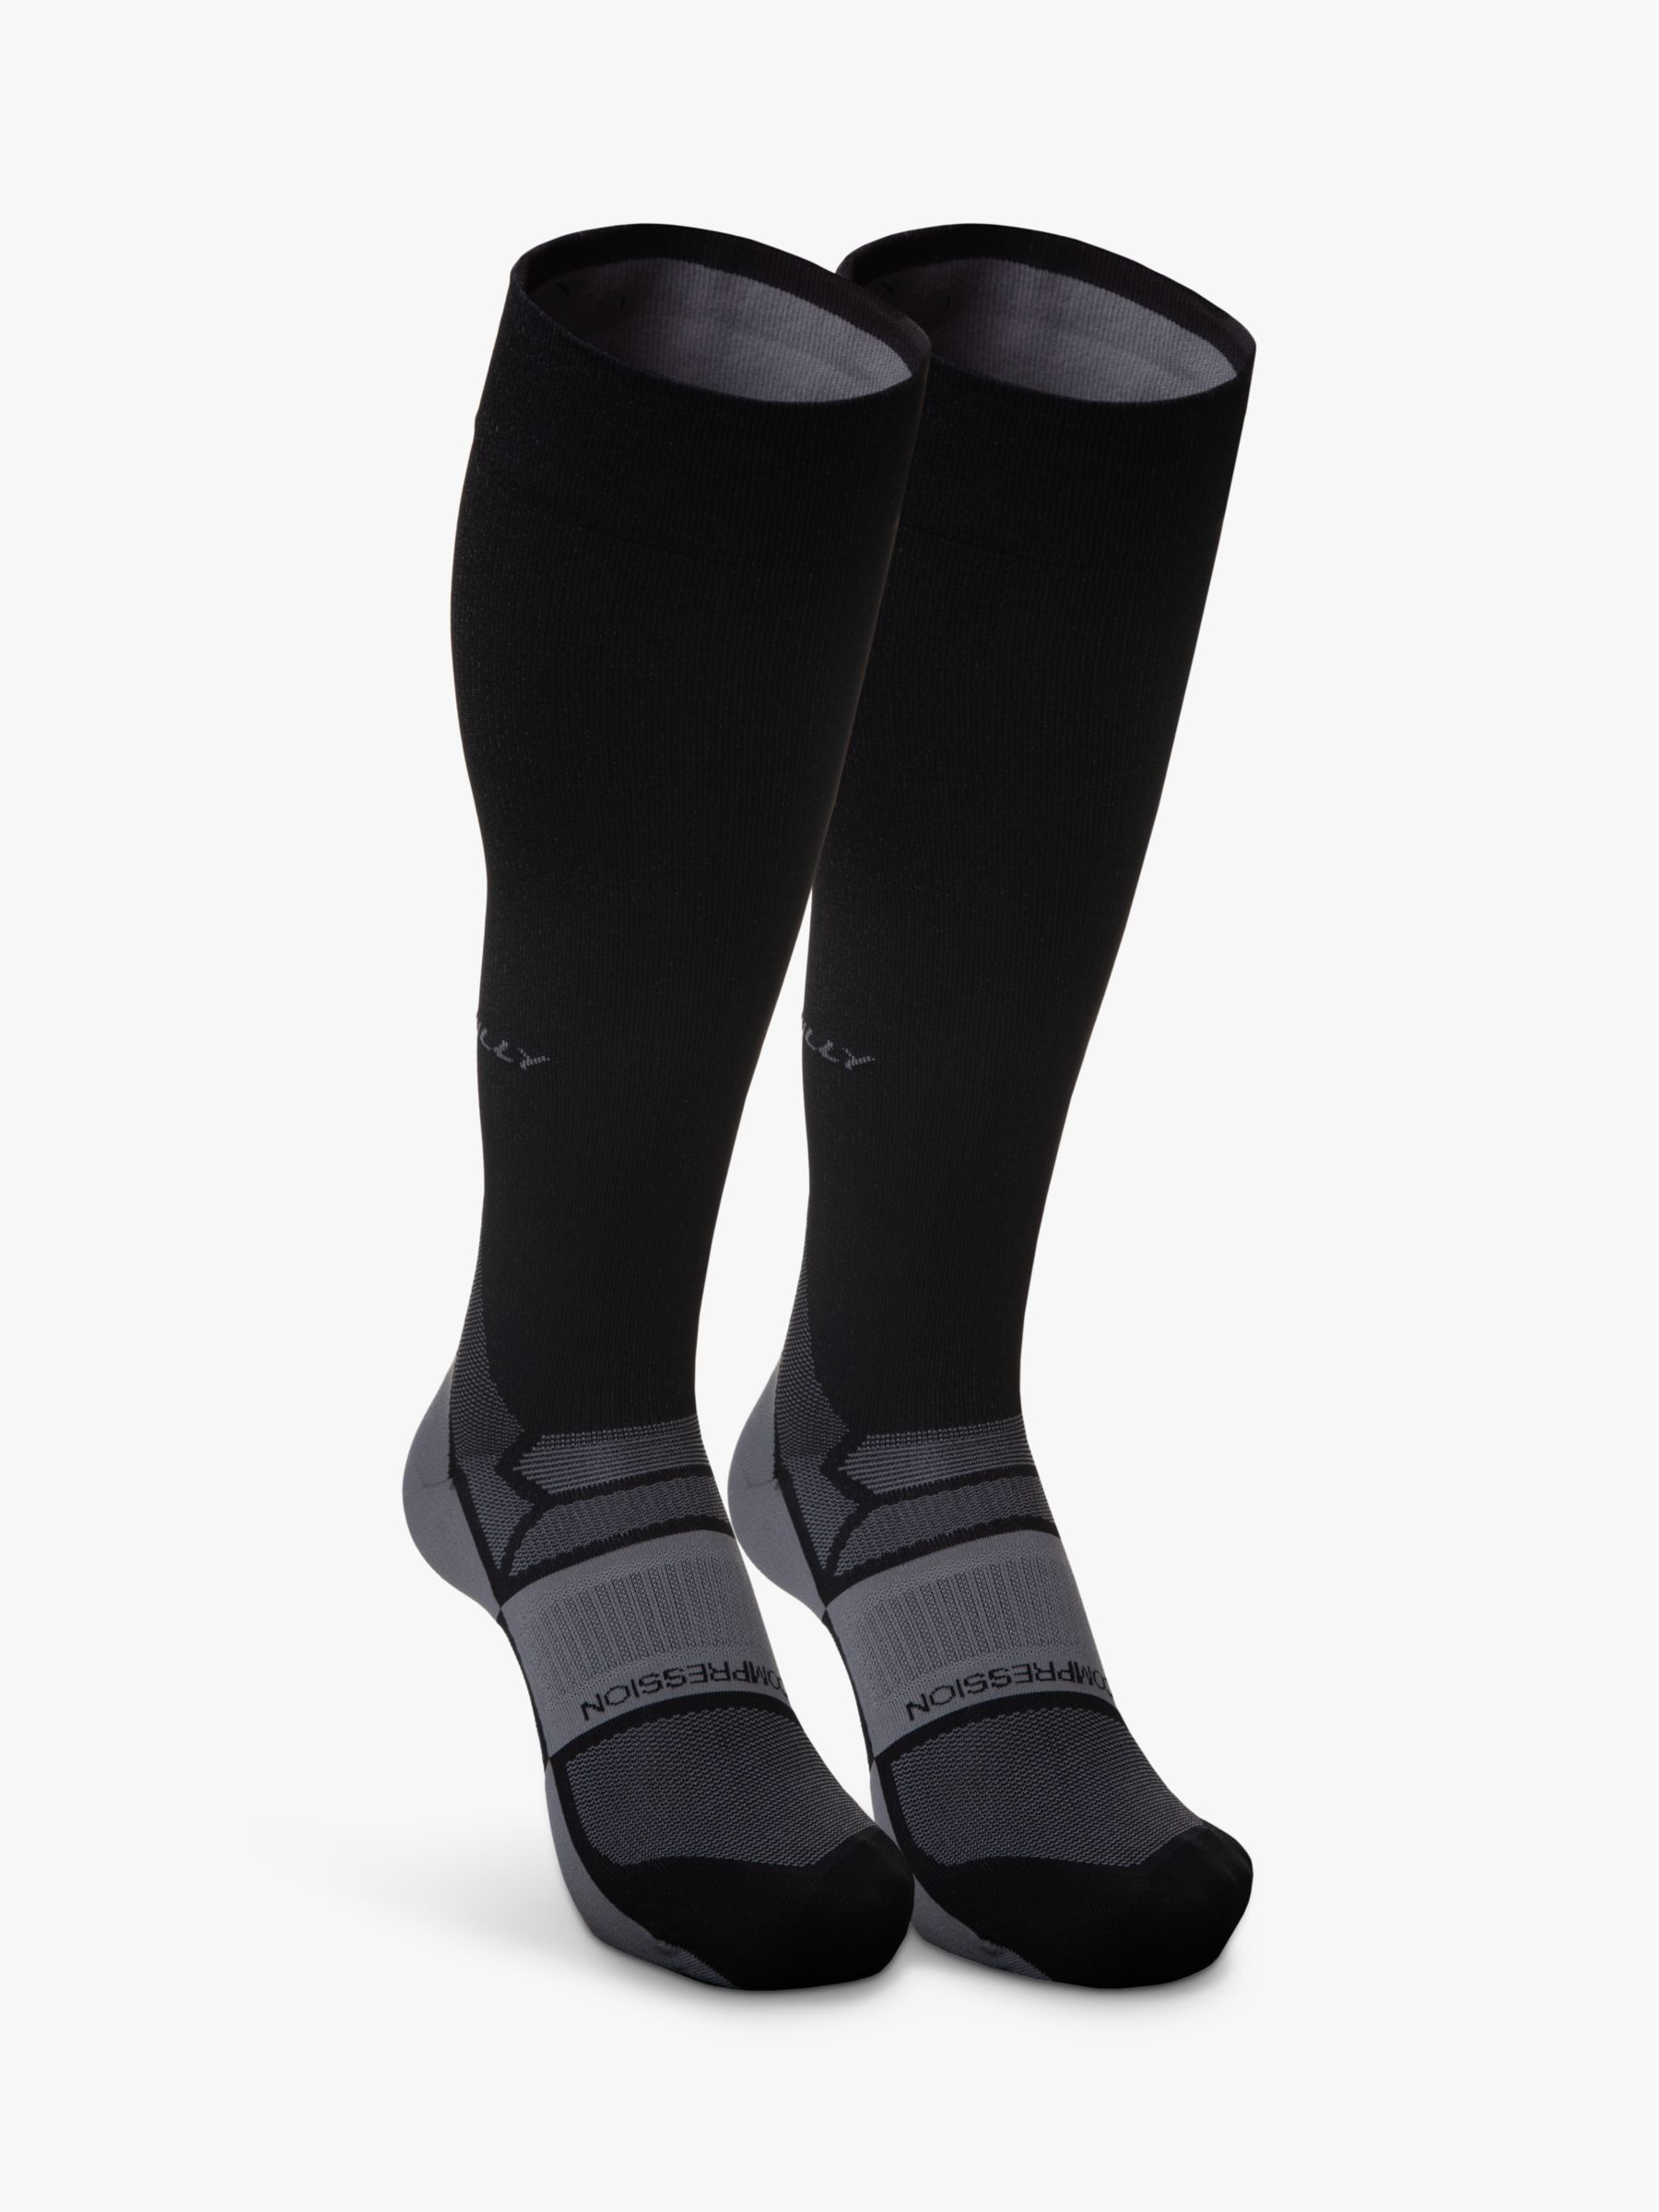 STOX Energy Socks - Sports Socks for Women - Premium Compression